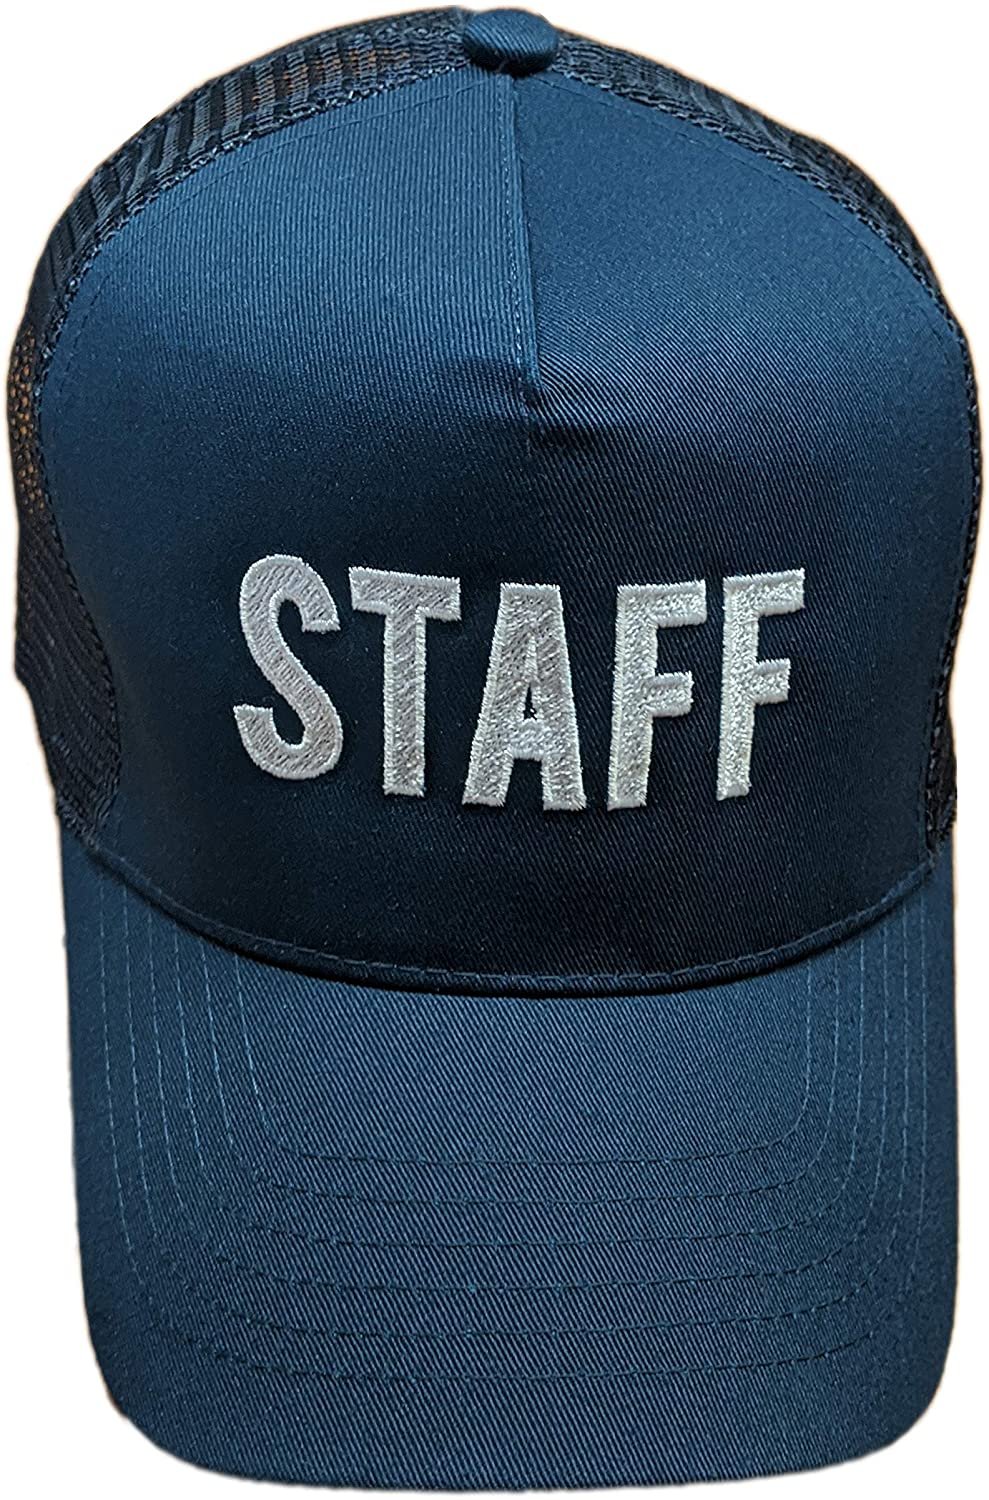 Staff Baseball Hat Embroidered Mesh Trucker Cap (Navy & White)